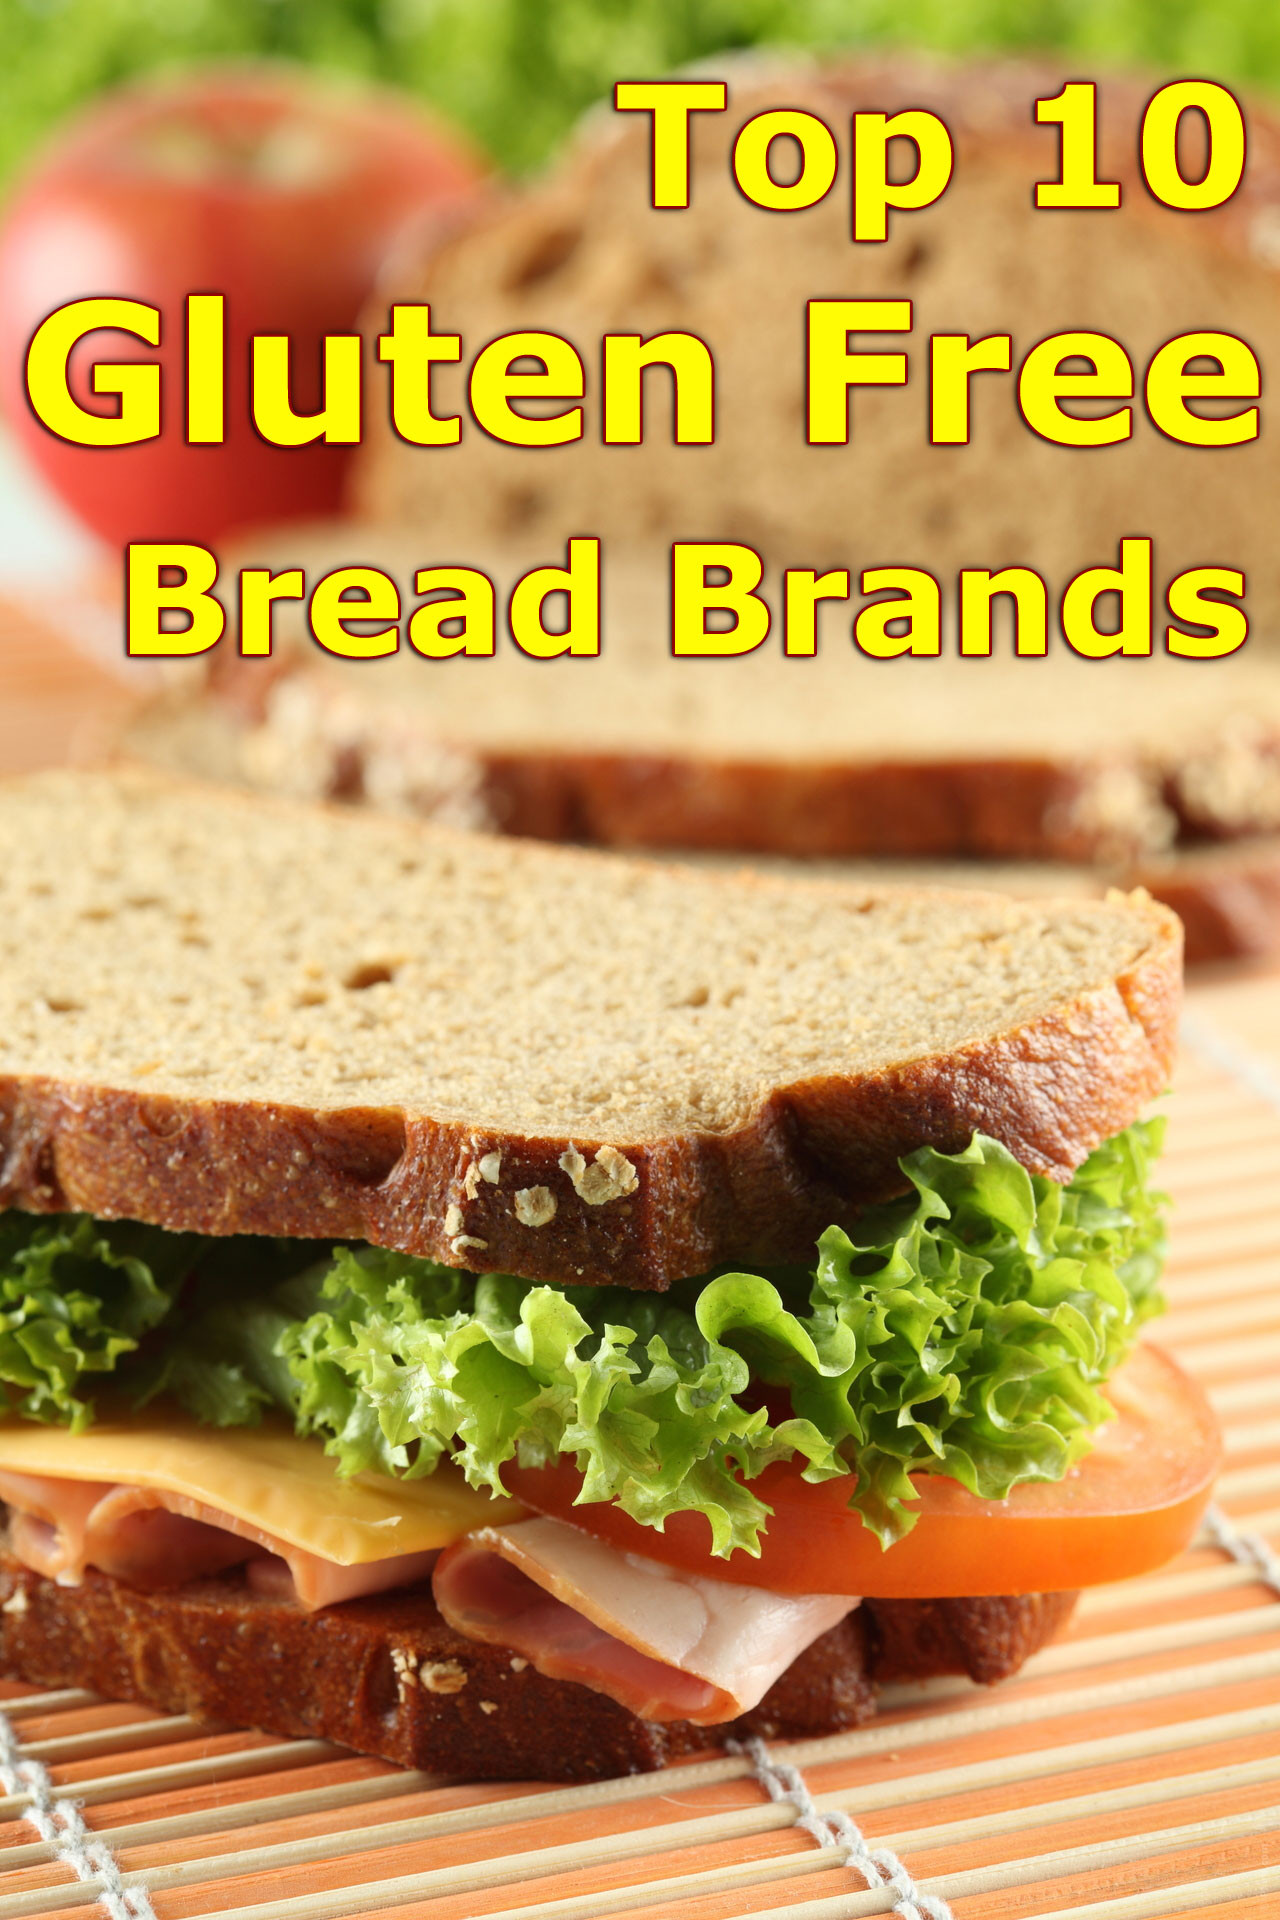 Gluten Free Bread Brands
 Top 10 Gluten Free Bread Brands